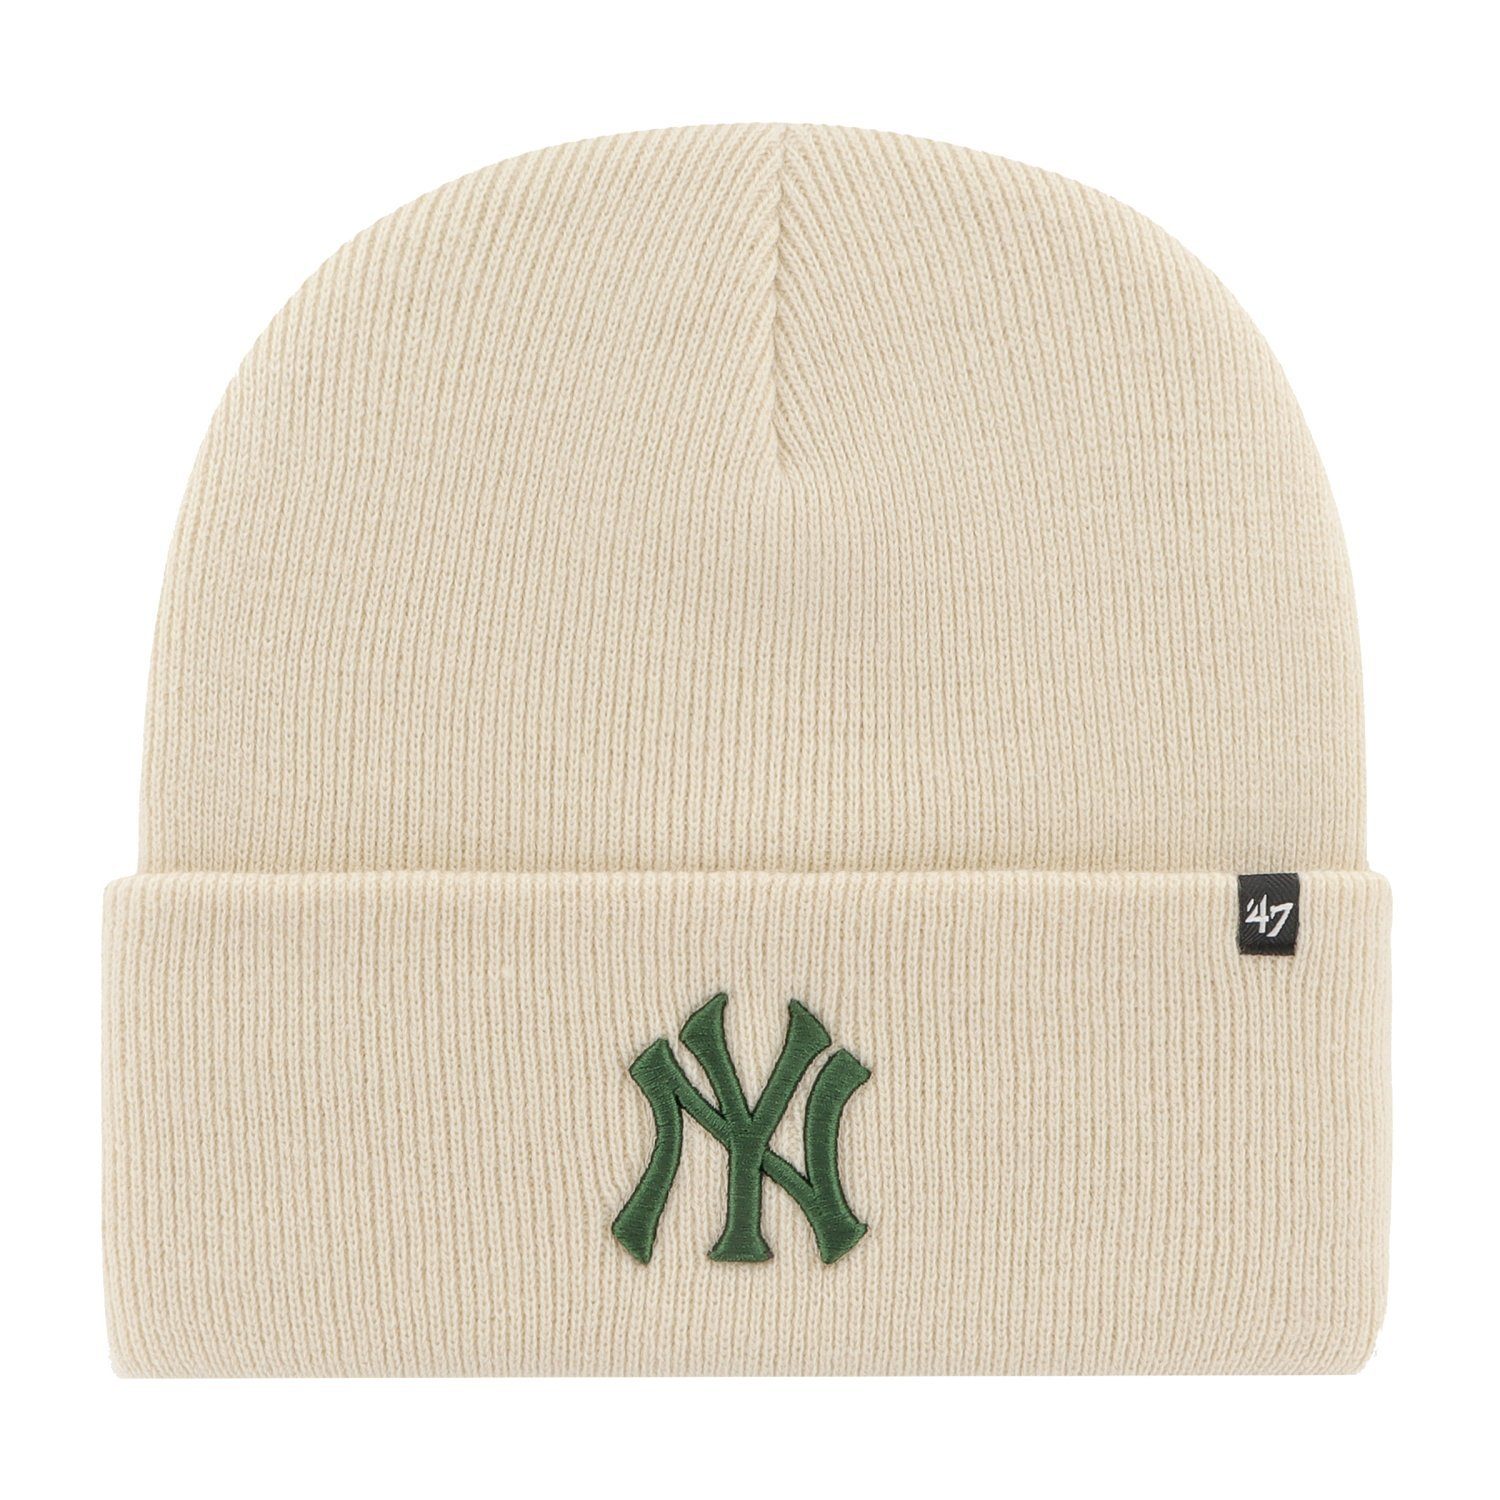 '47 Brand Fleecemütze Beanie HAYMAKER NY Yankees